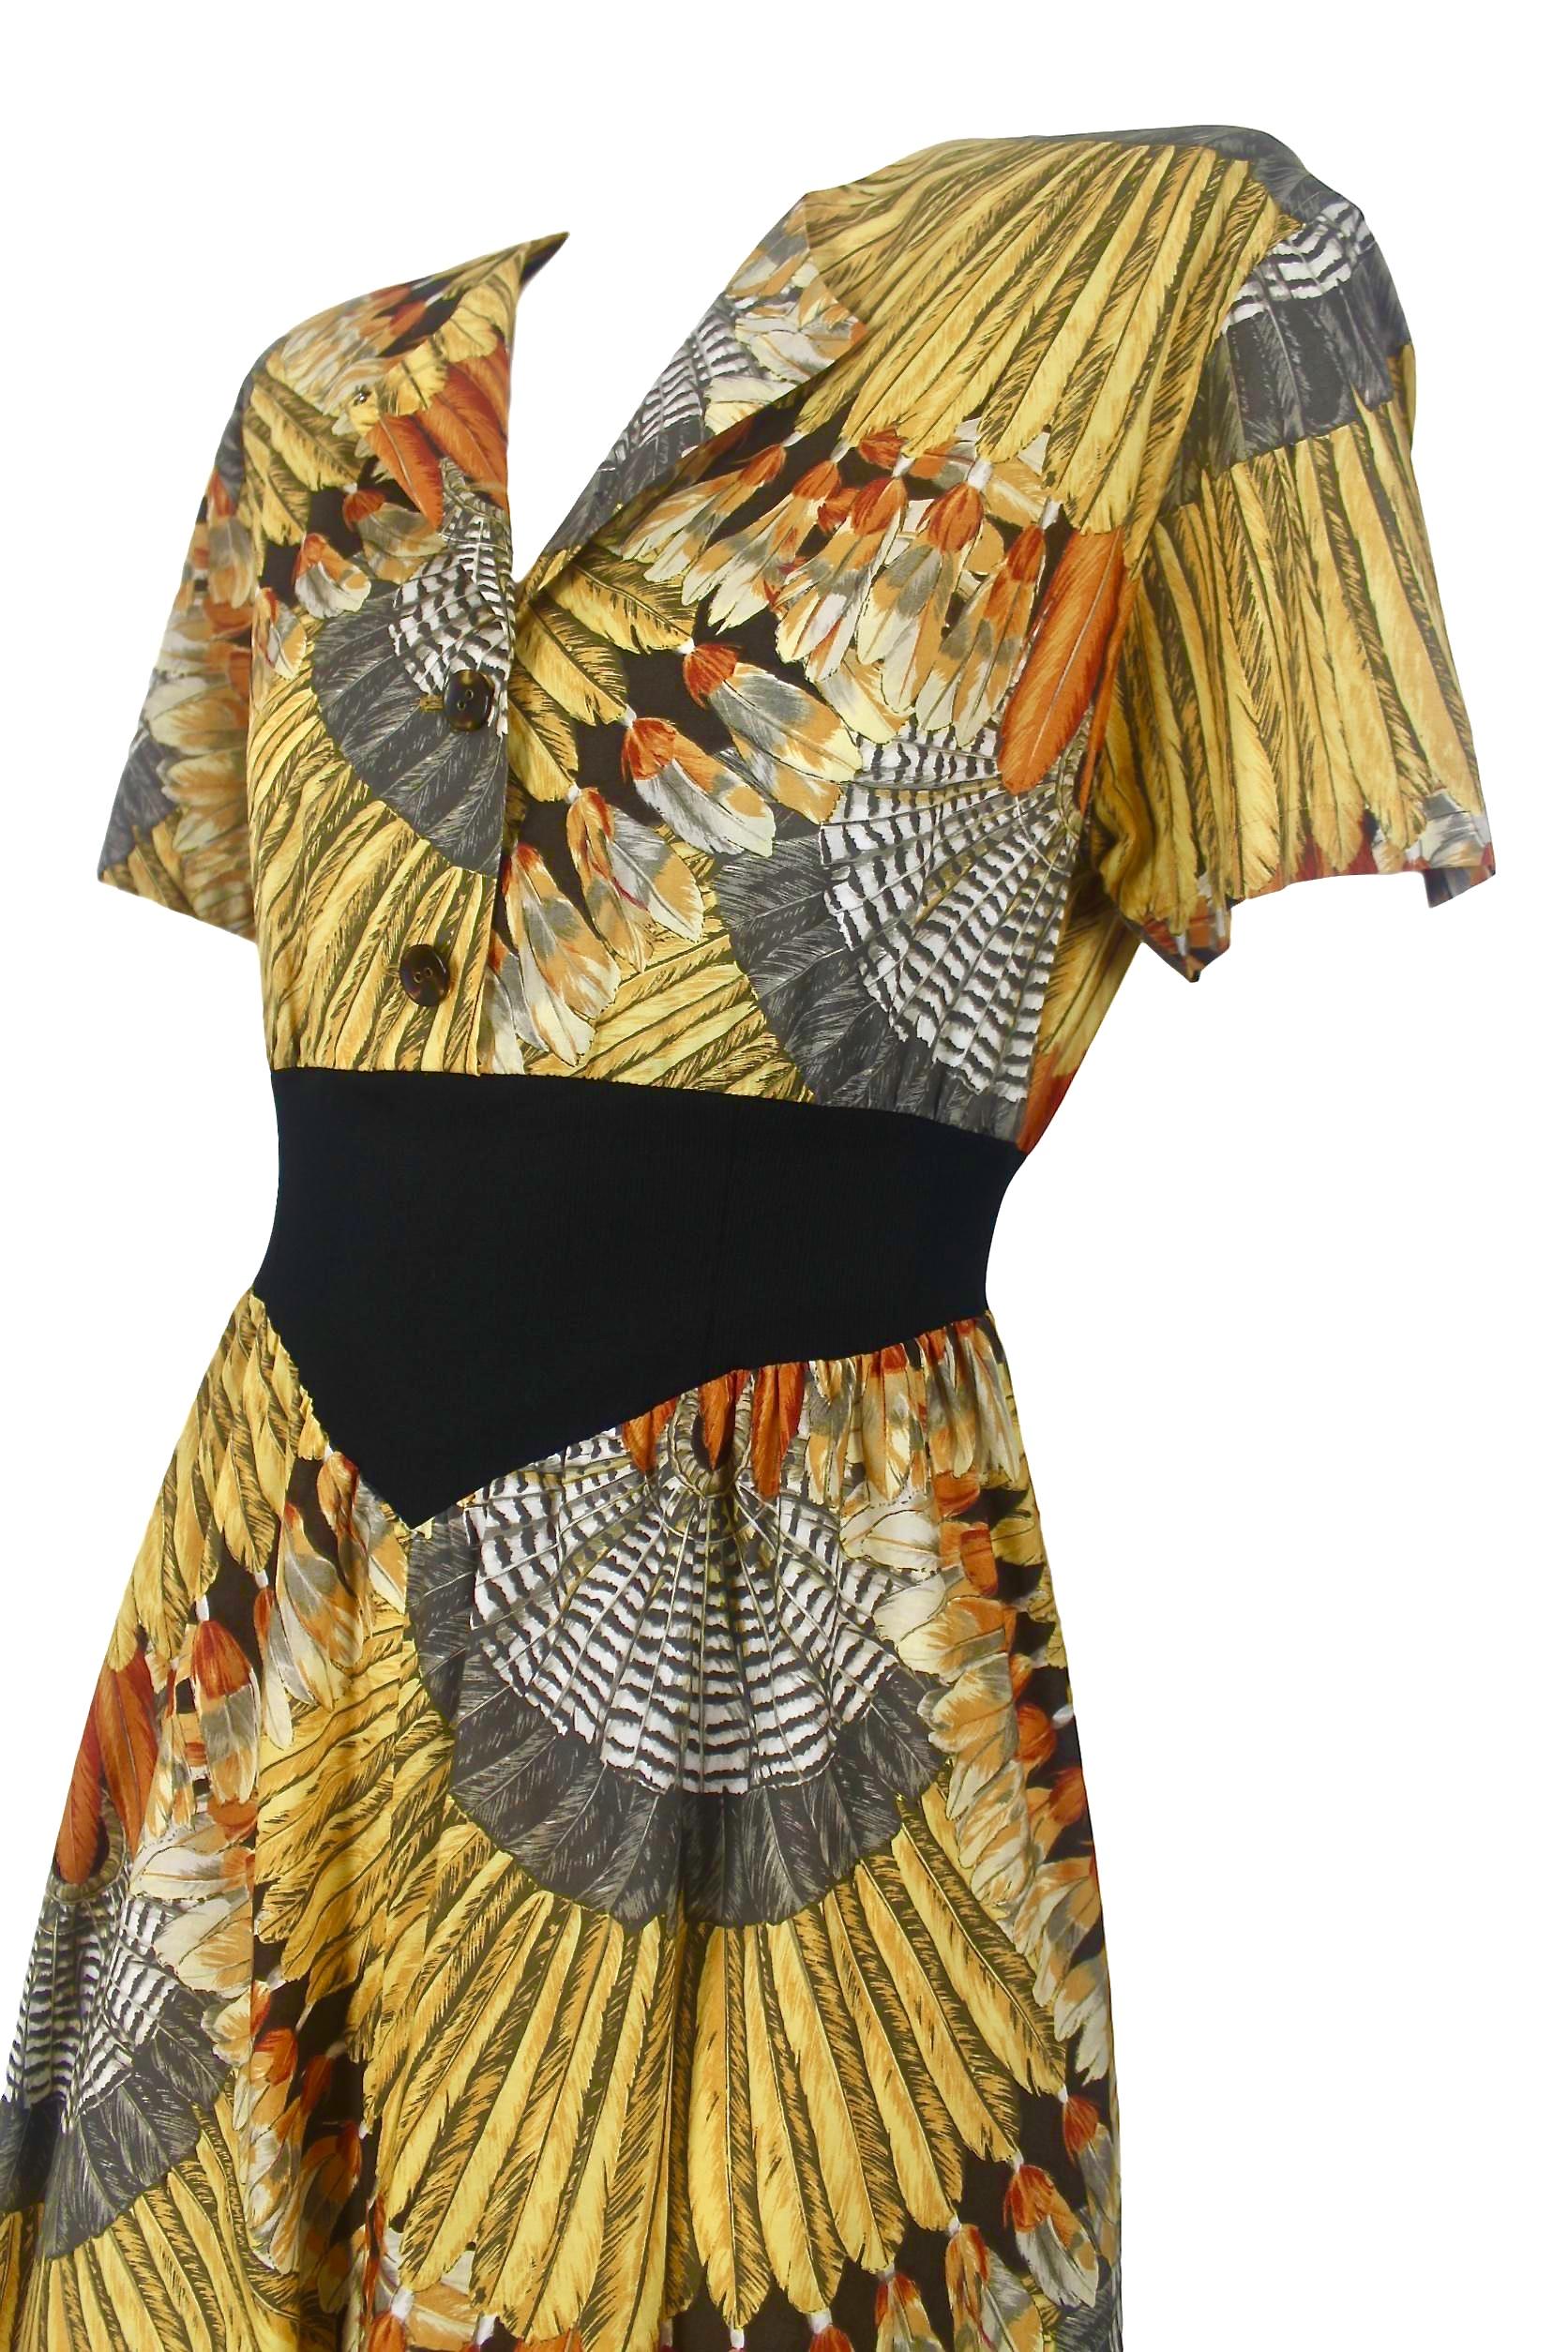 Sorelle Fontana Feather Print Dress For Sale 1